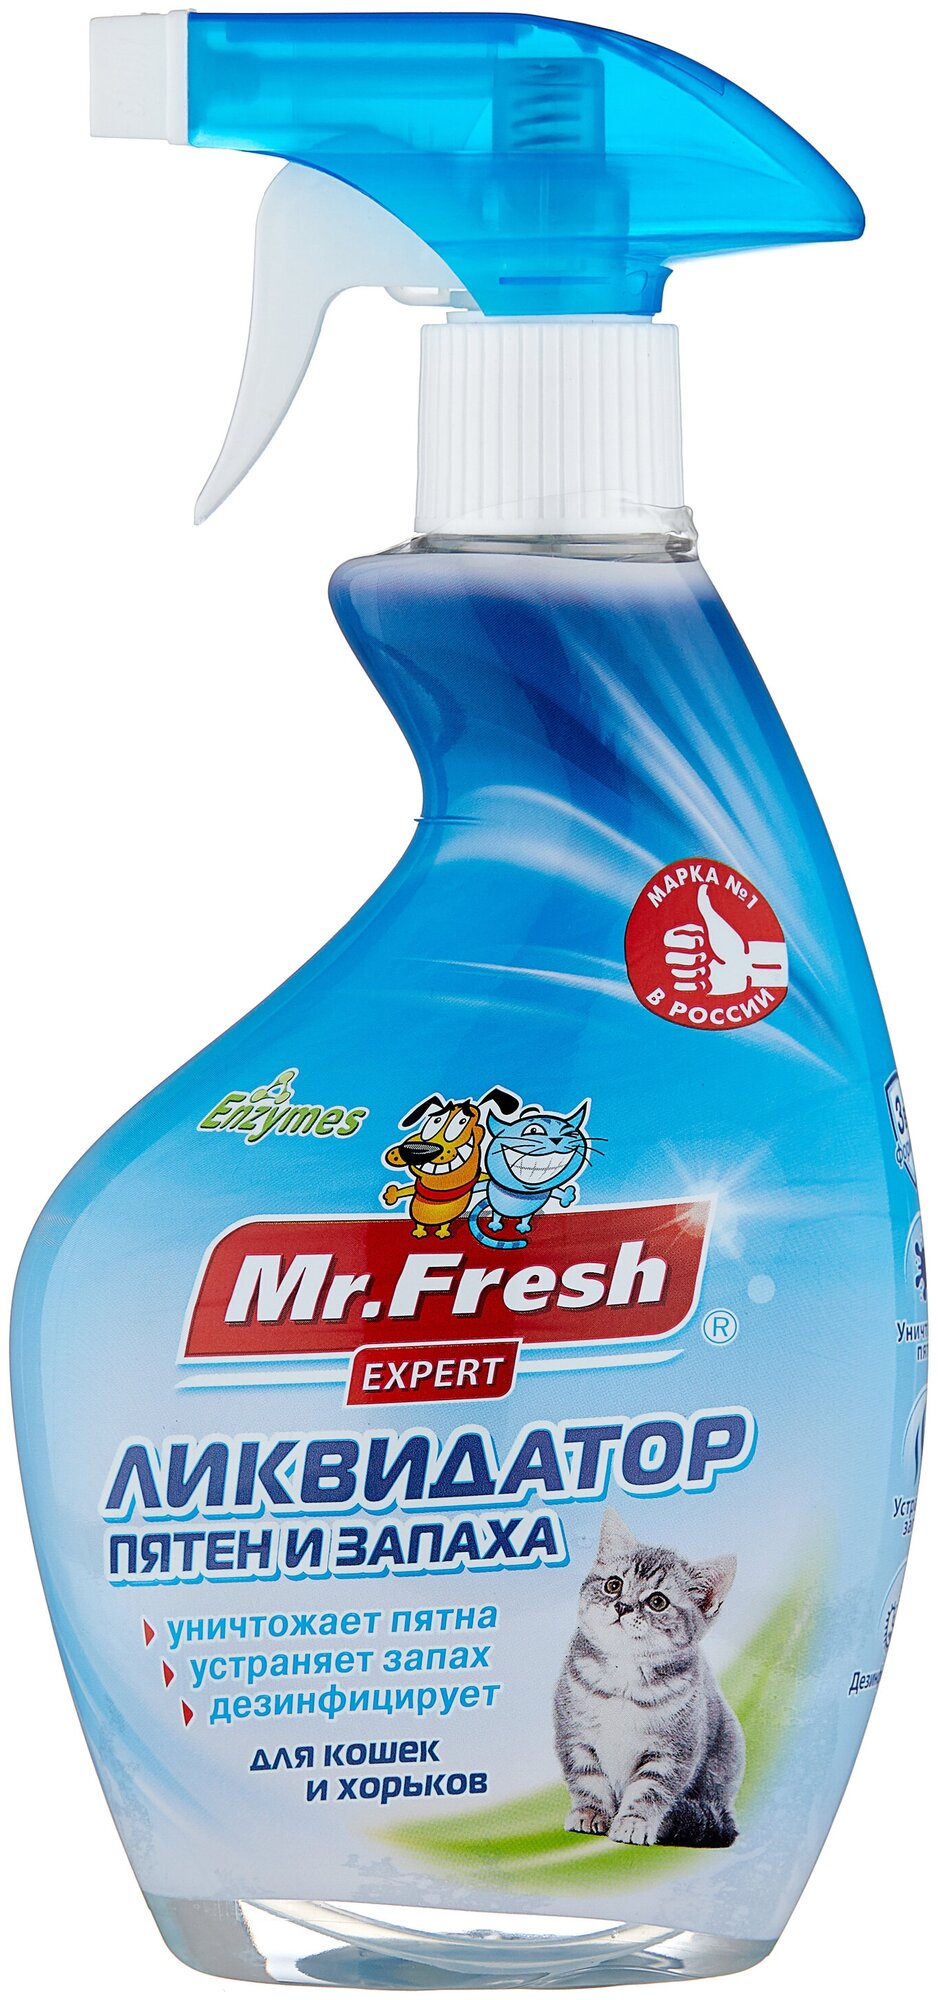 Ликвидатор запаха Mr. Fresh ликвидатор пятен и запаха для кошек и хорьков